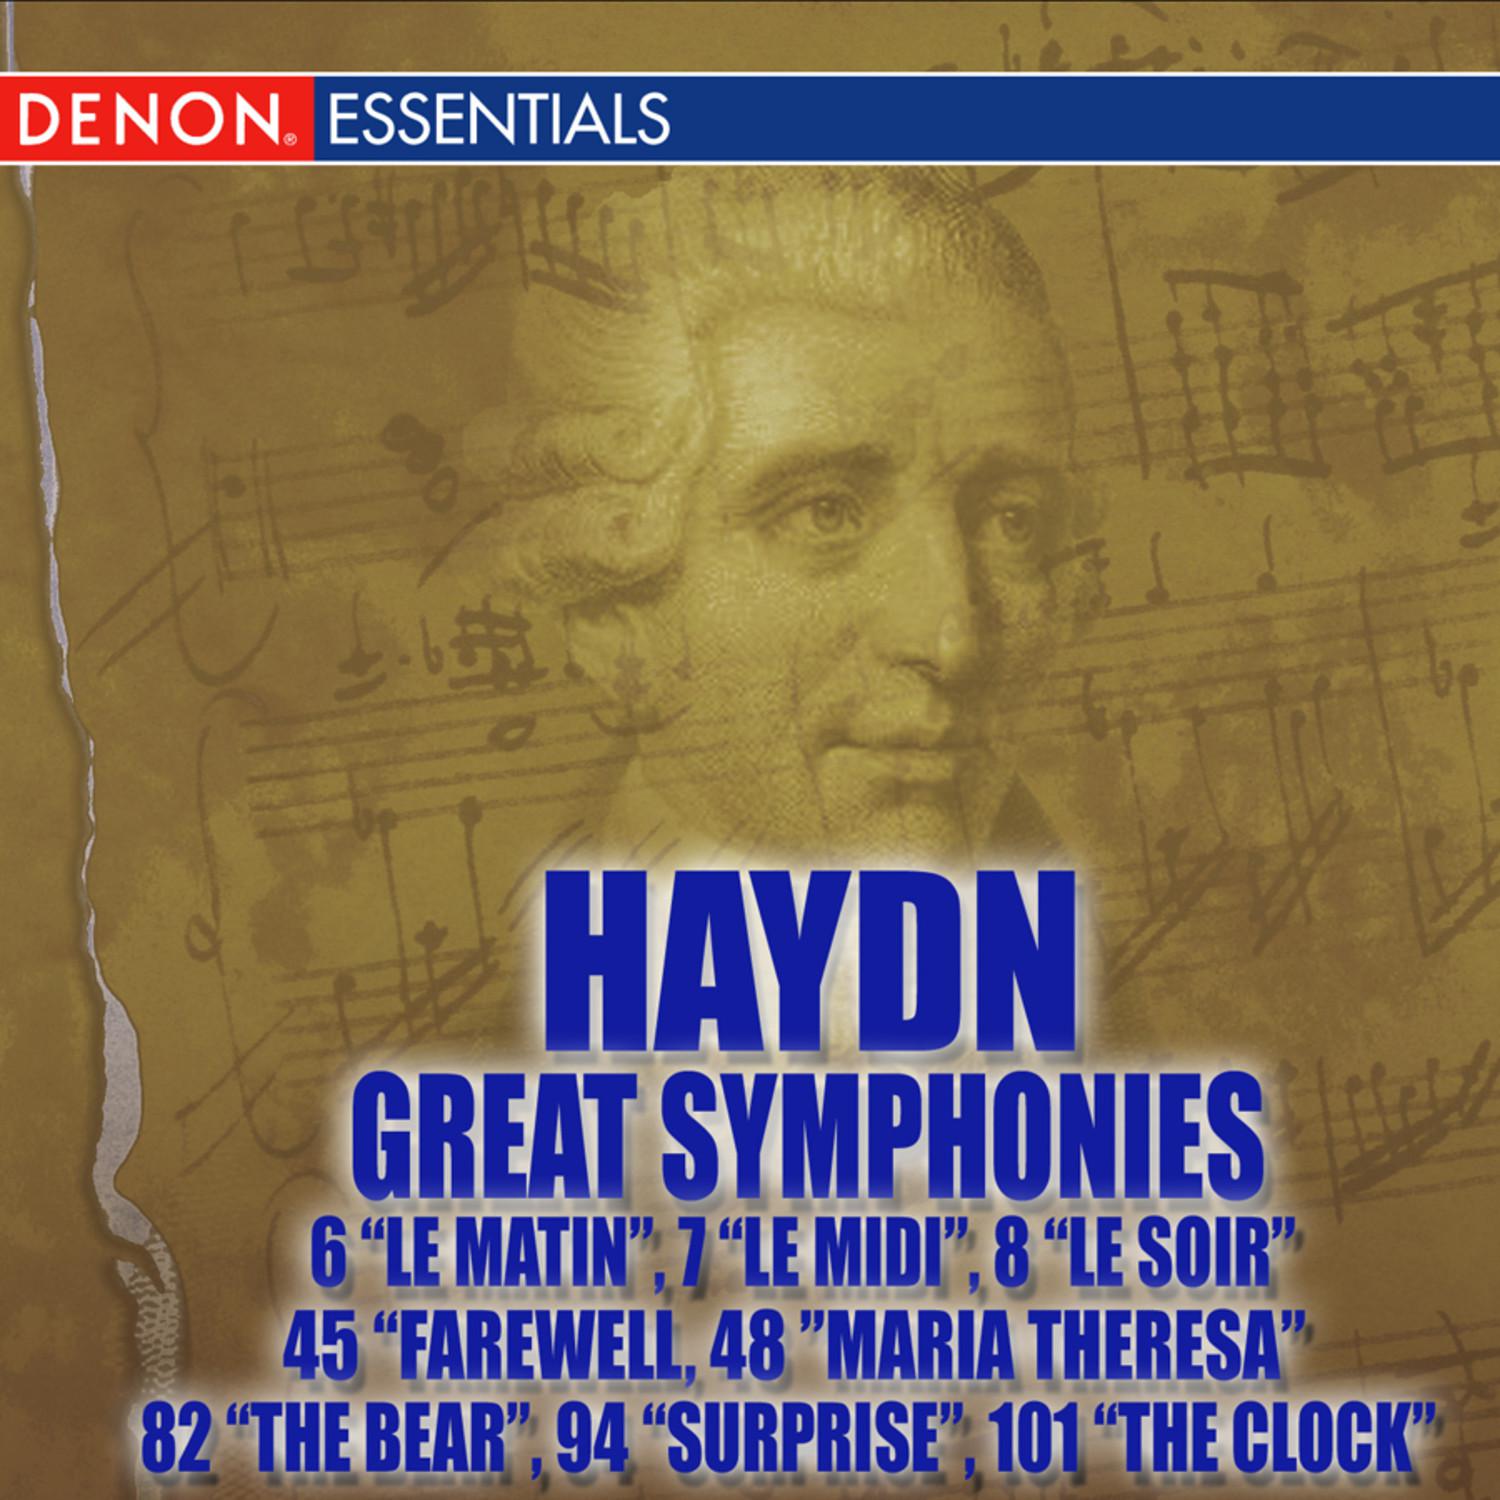 Haydn Symphony No. 6 in D Major "Le matin": I. Adagio - Allegro